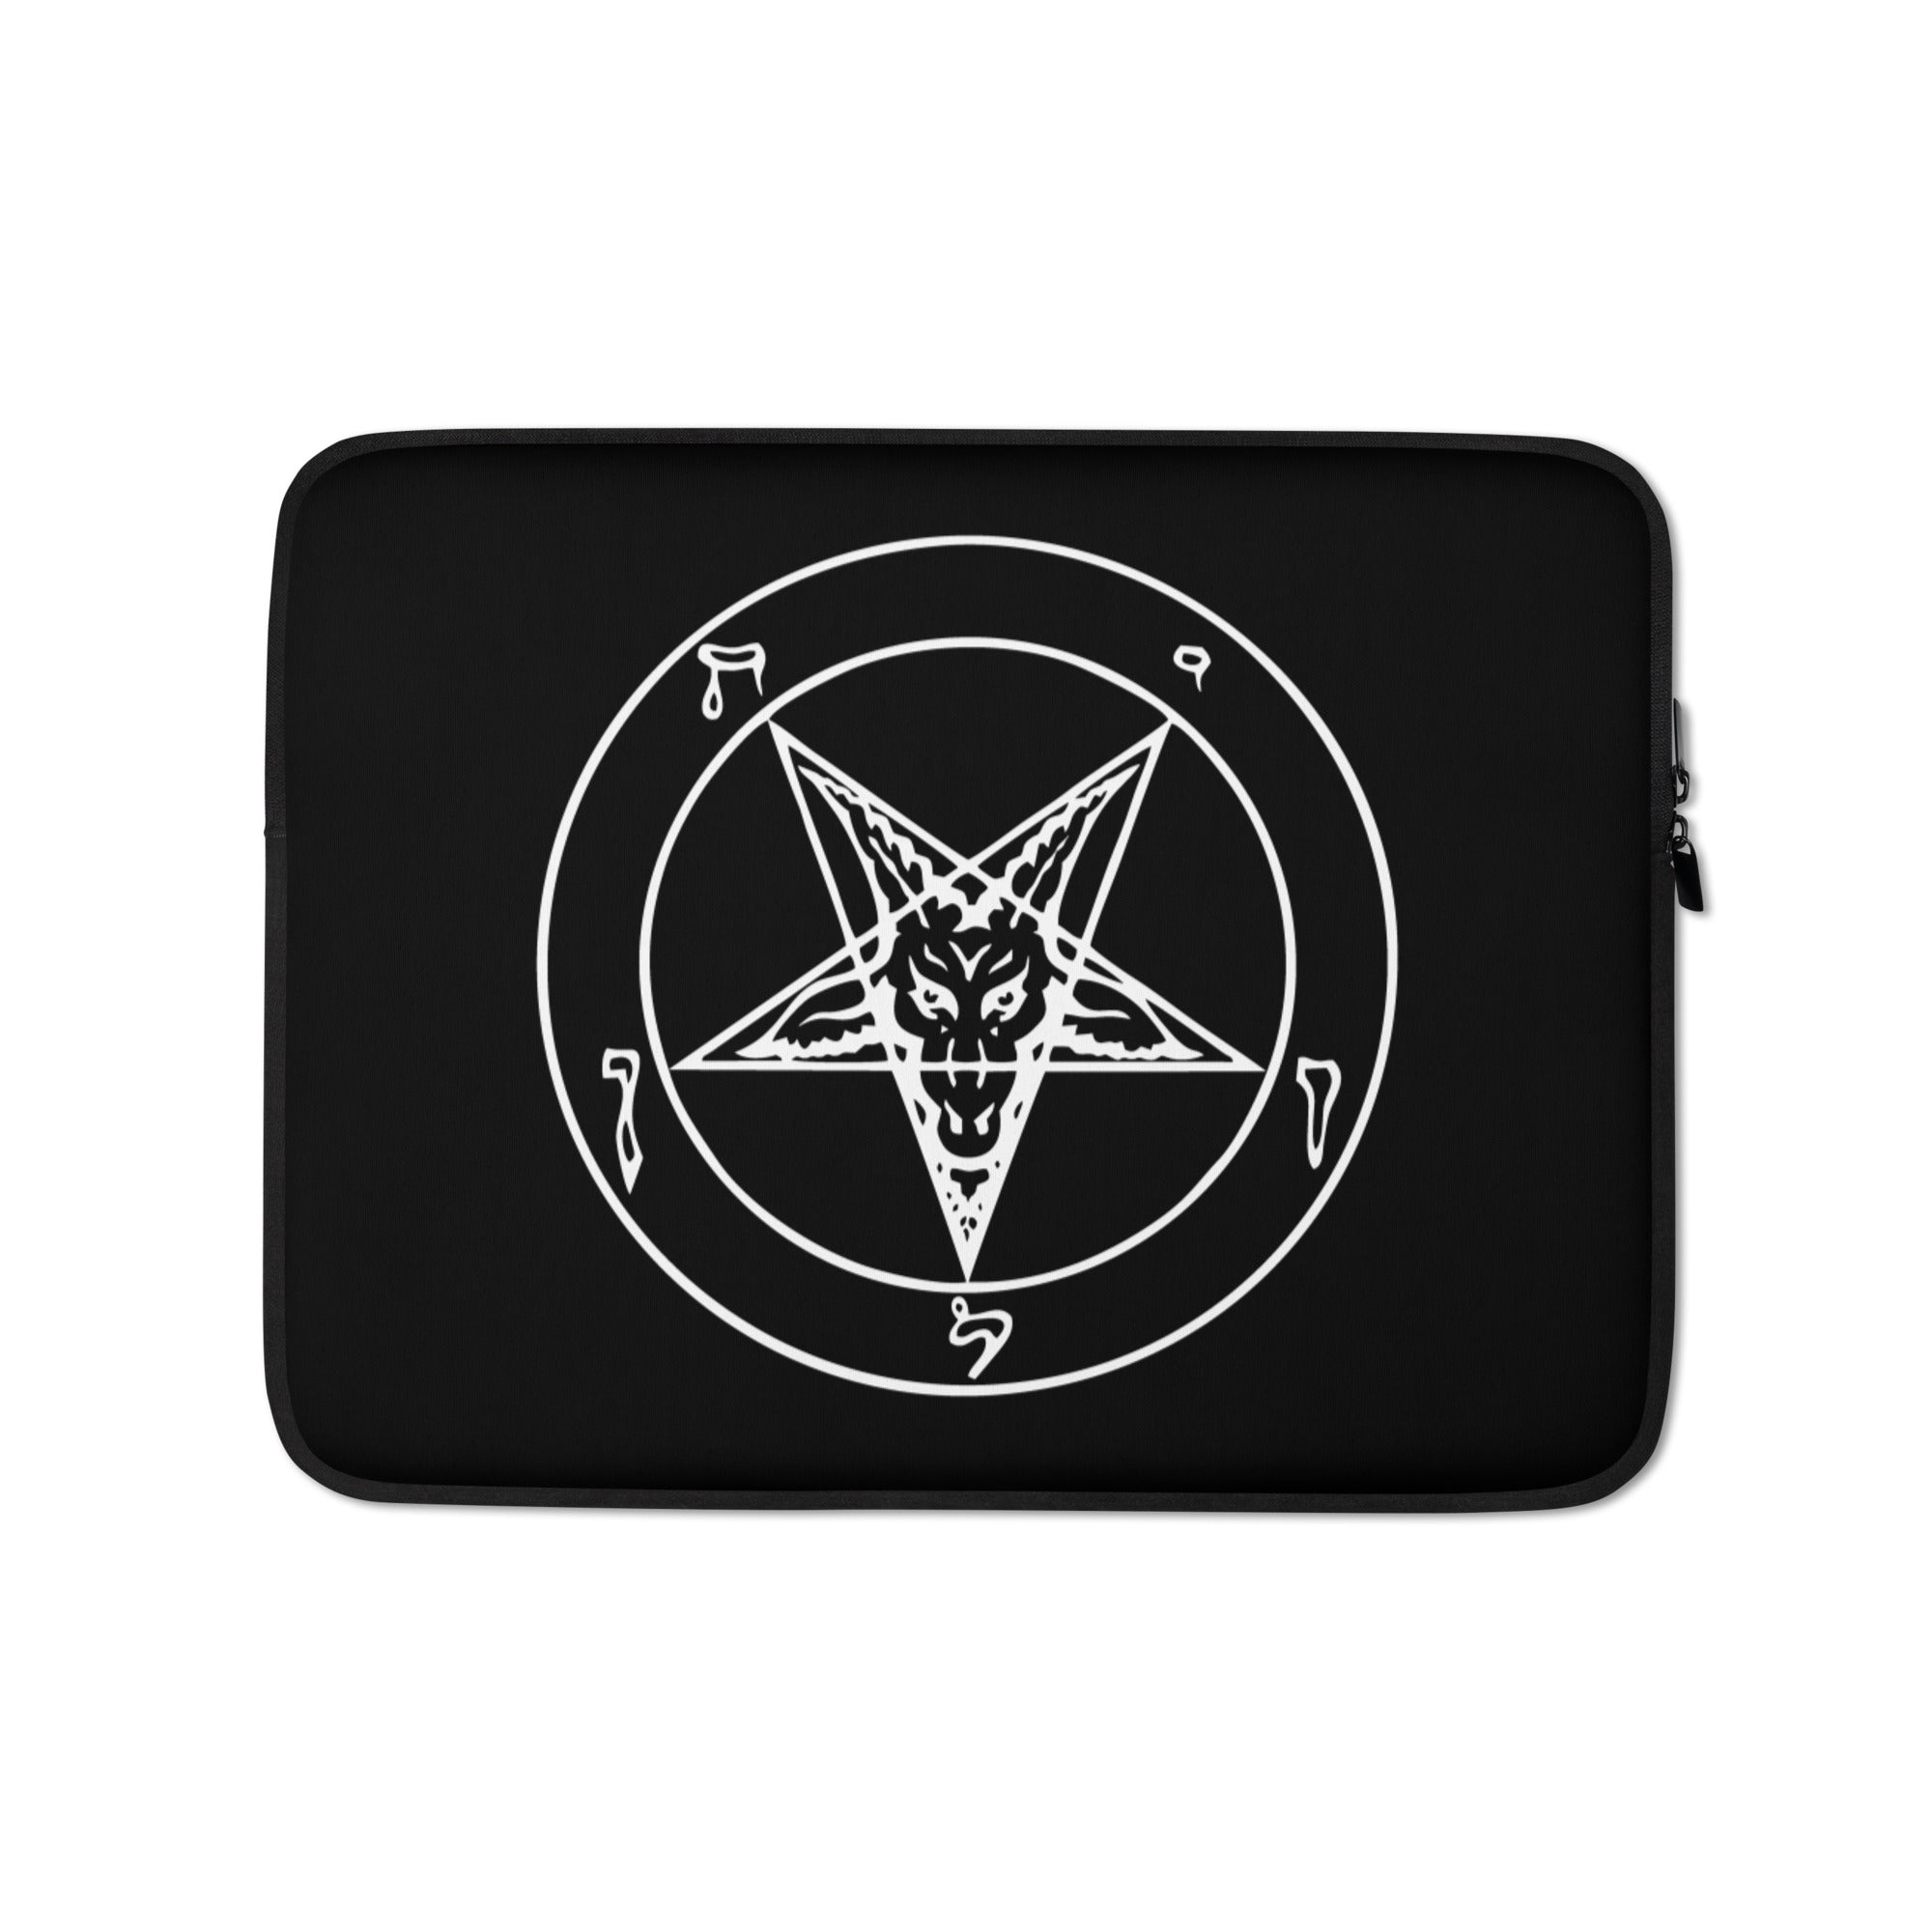 Baphomet Sigil Satanic Occult Symbol on Laptop Sleeve - Edge of Life Designs